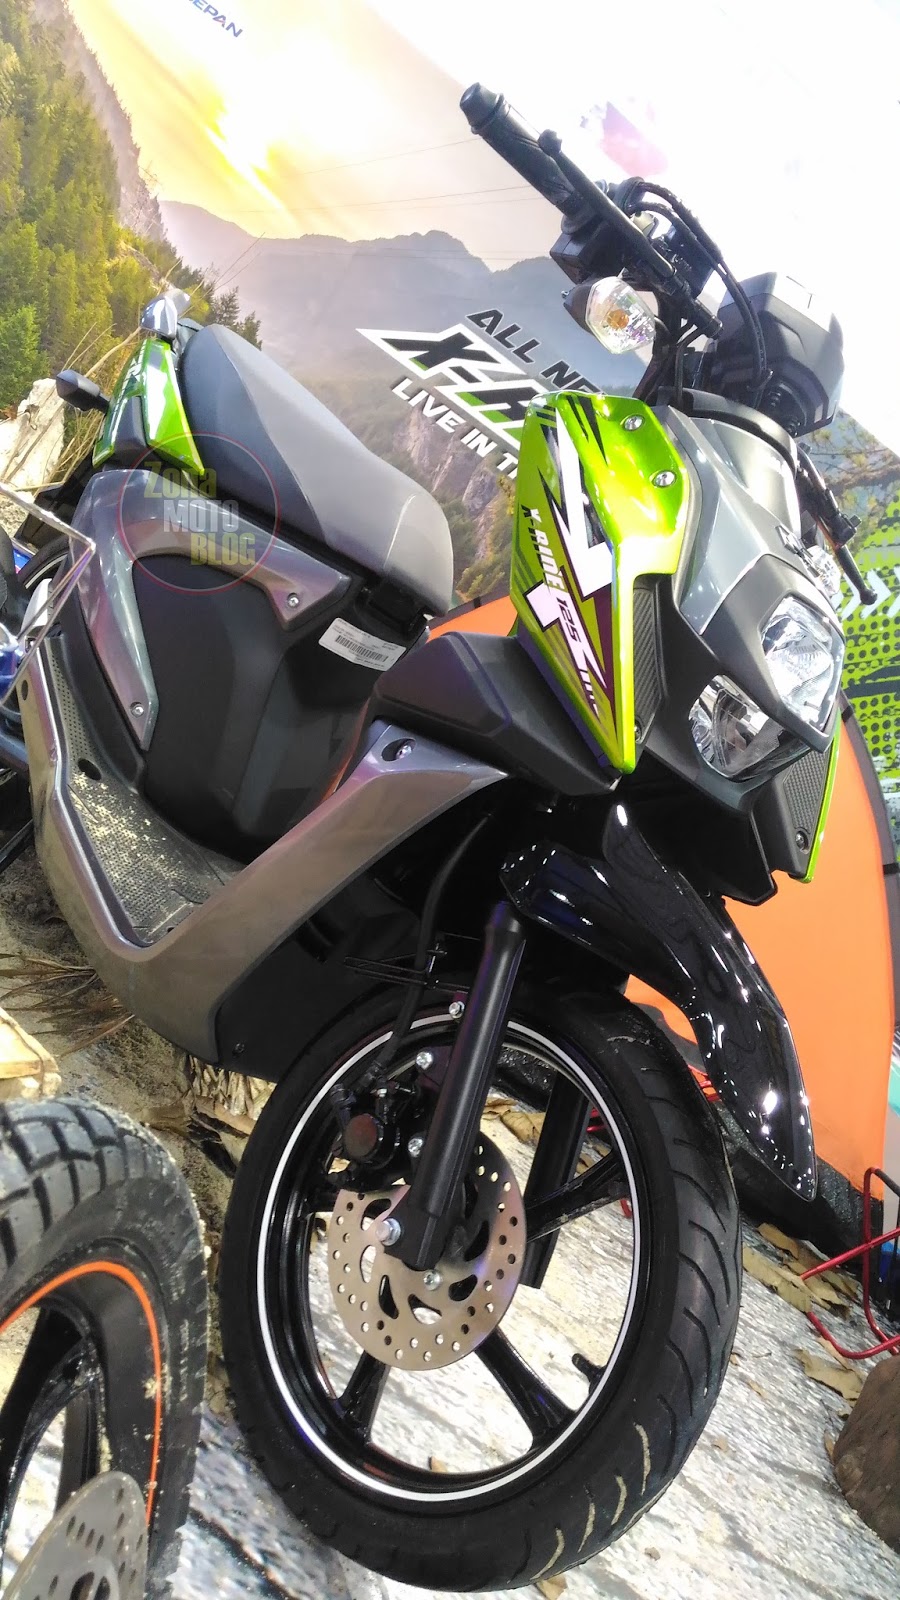 Review Fisik All New Yamaha X Ride 125 2017 Zona Moto Blog